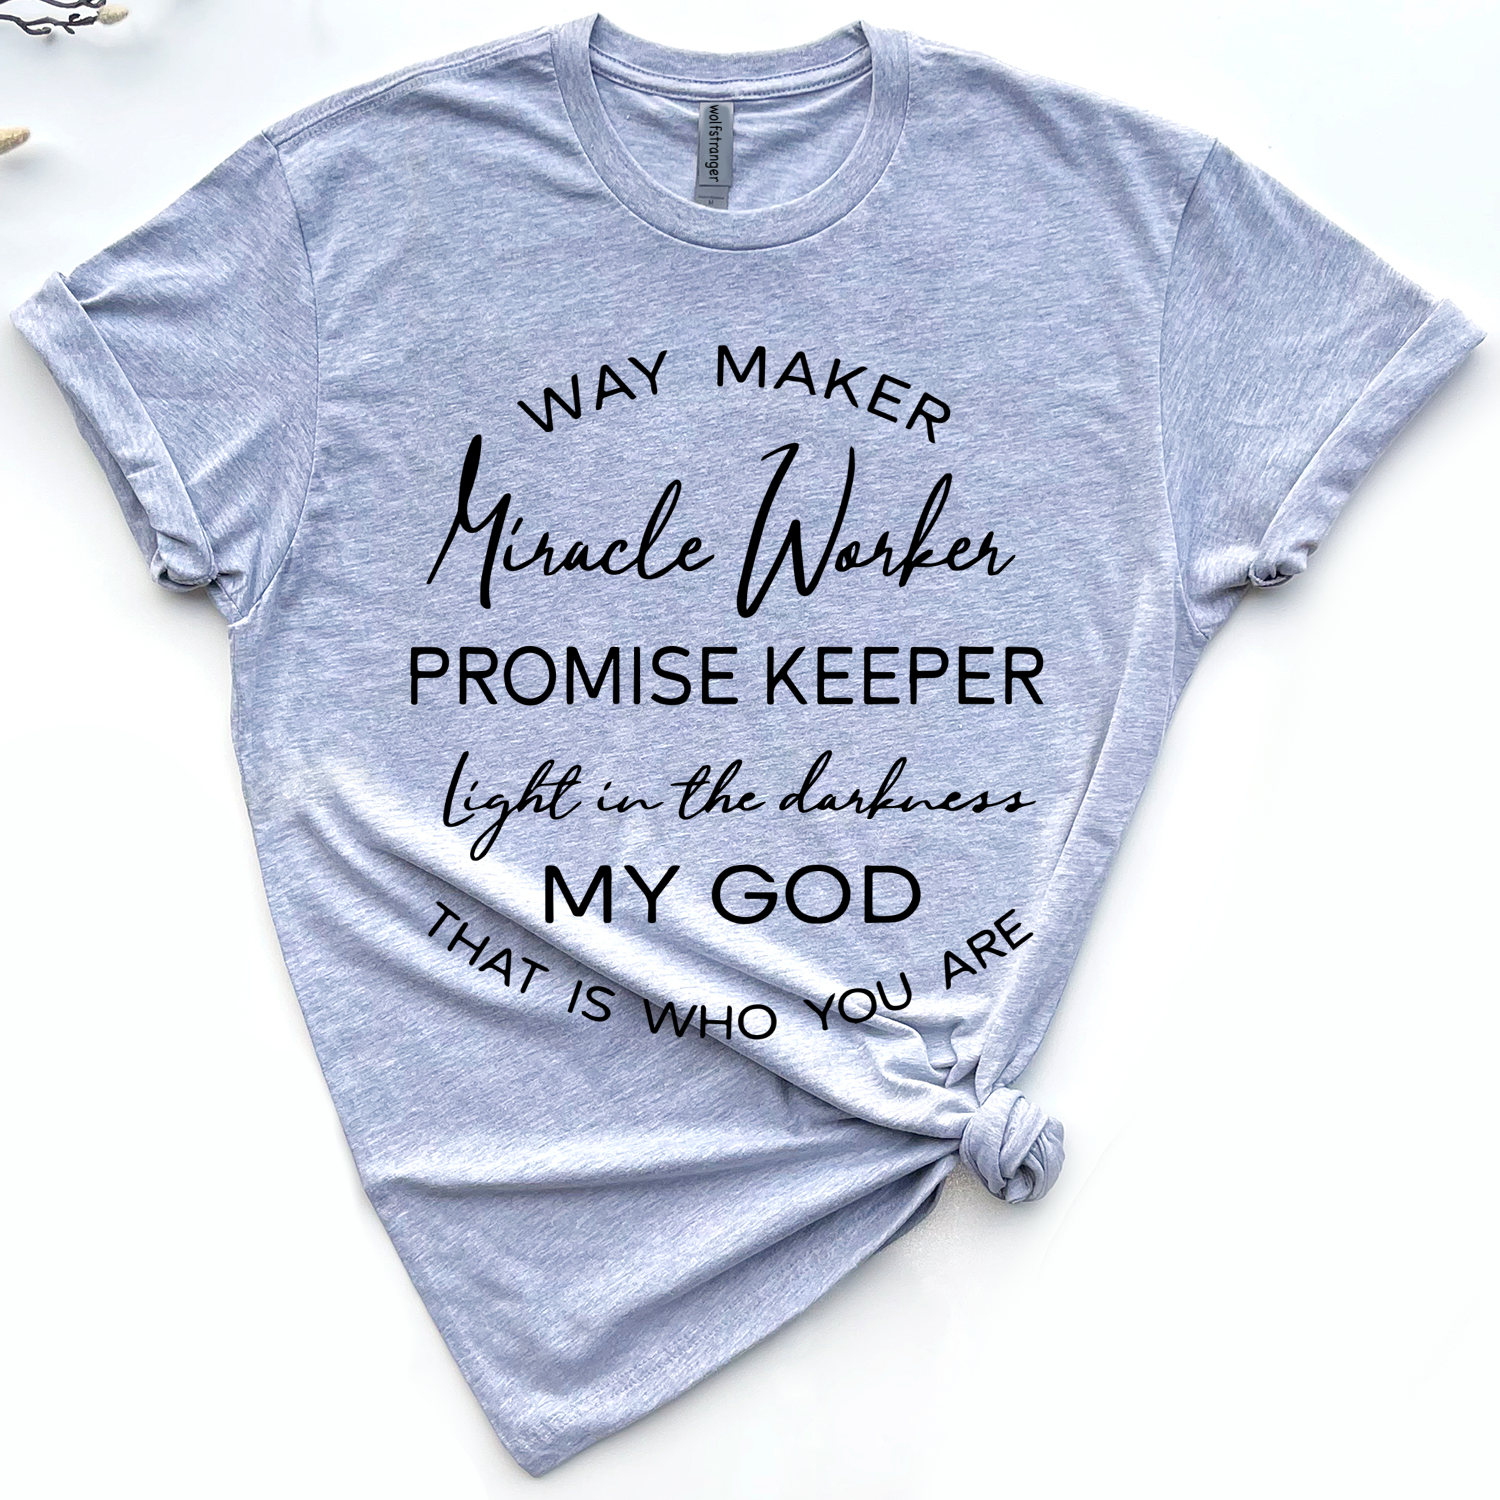 Way Maker Shirt. Way Maker Tee. Miracle Worker Shirt. Promise 